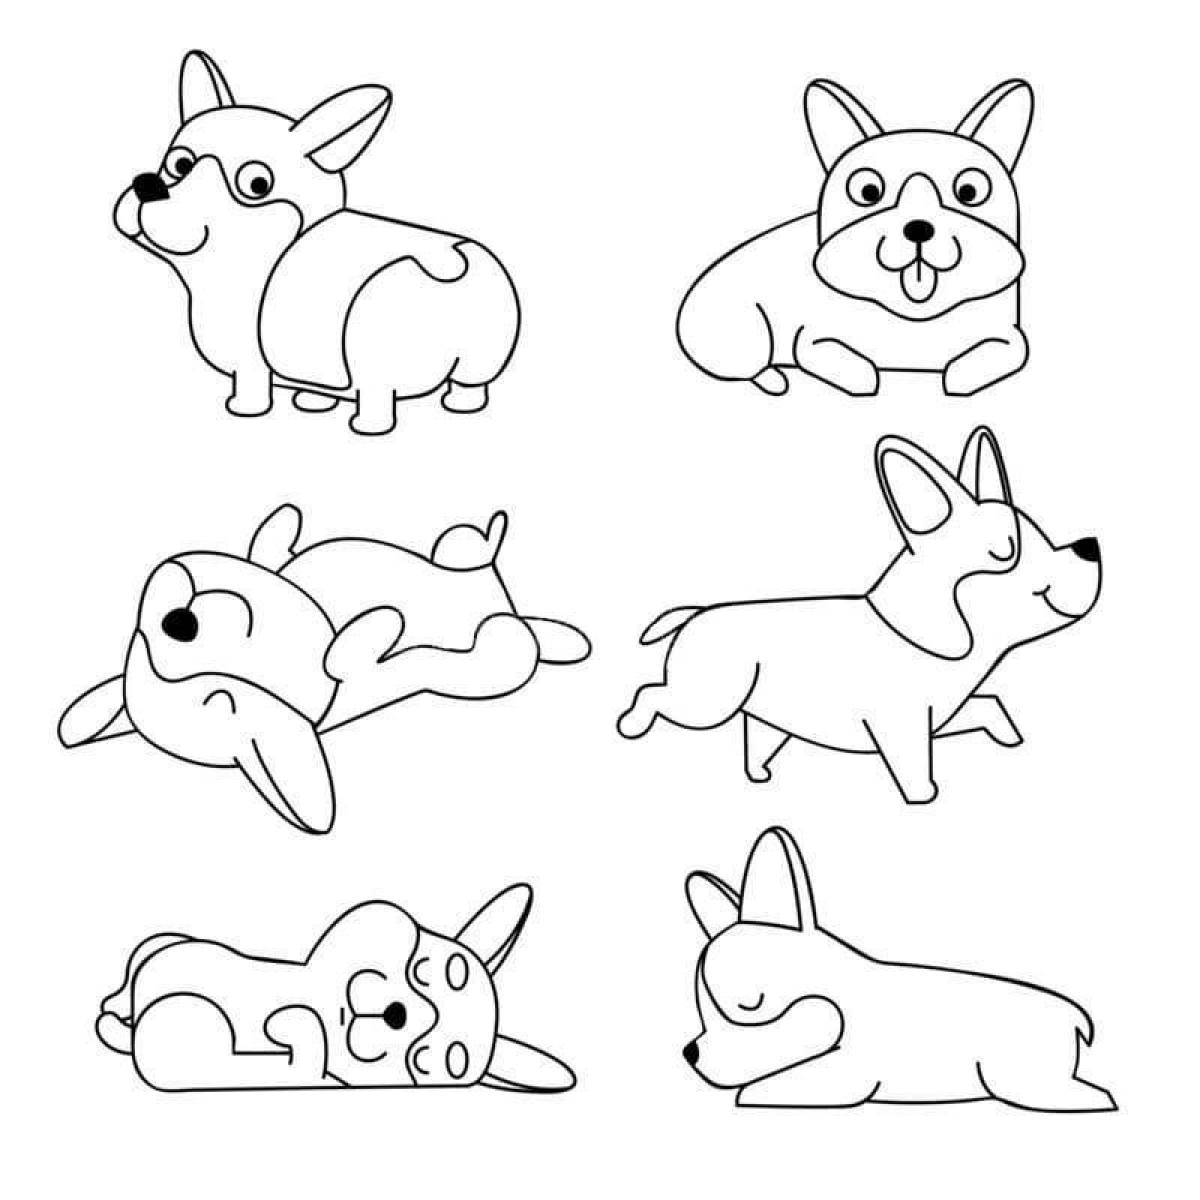 Wiggly corgi dog coloring page